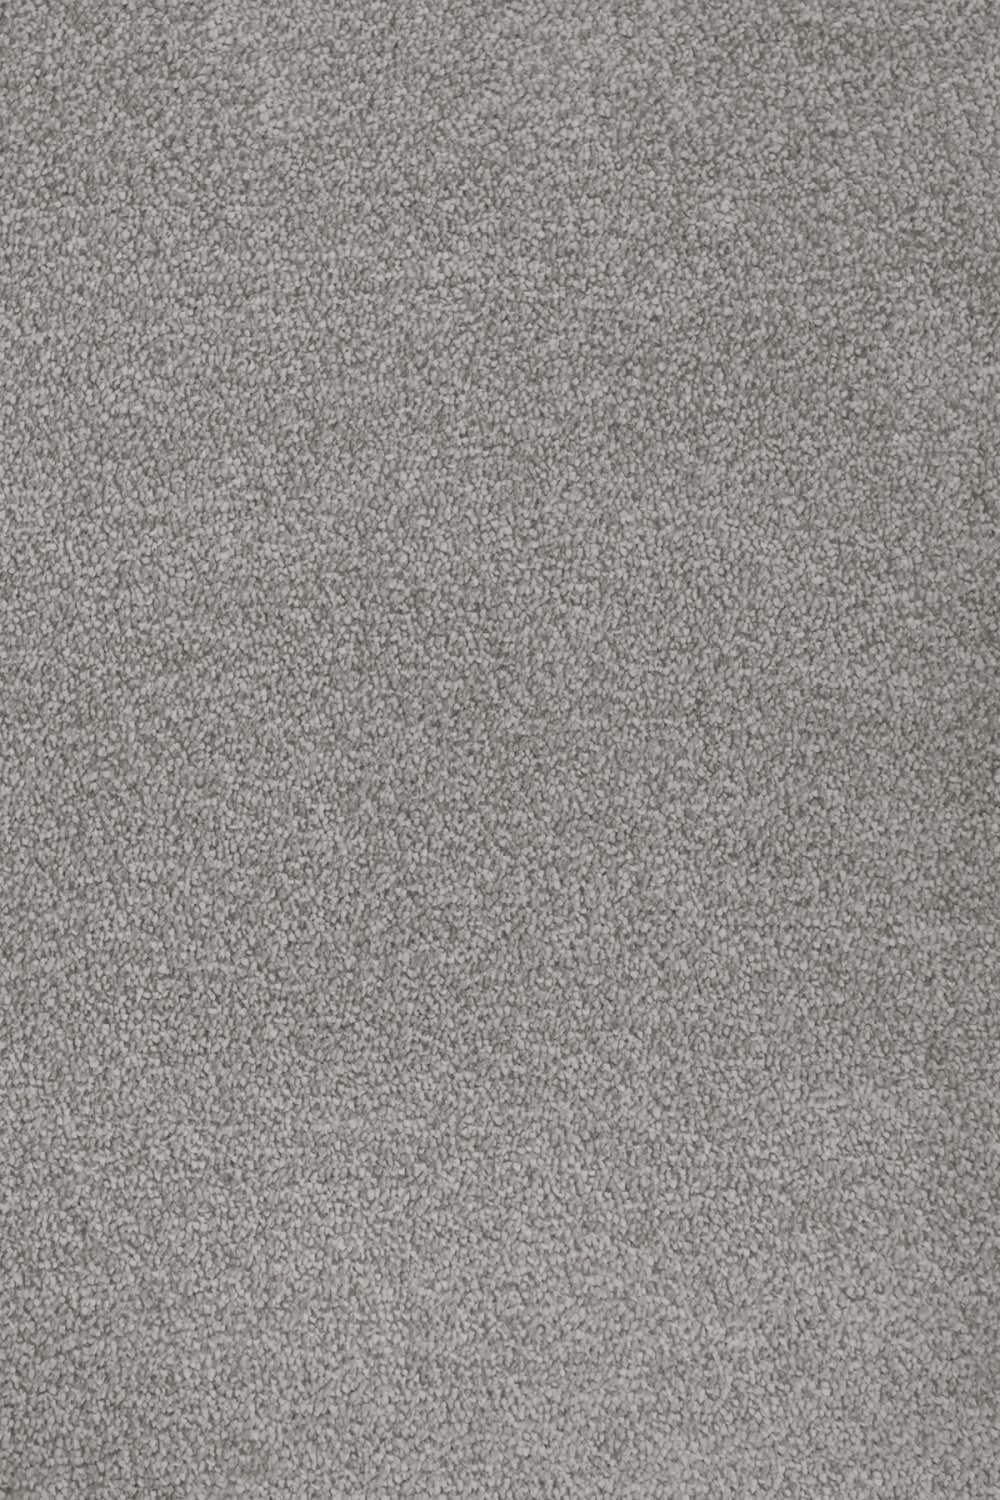 Septimus Twist Carpet - Pale Graphite 90